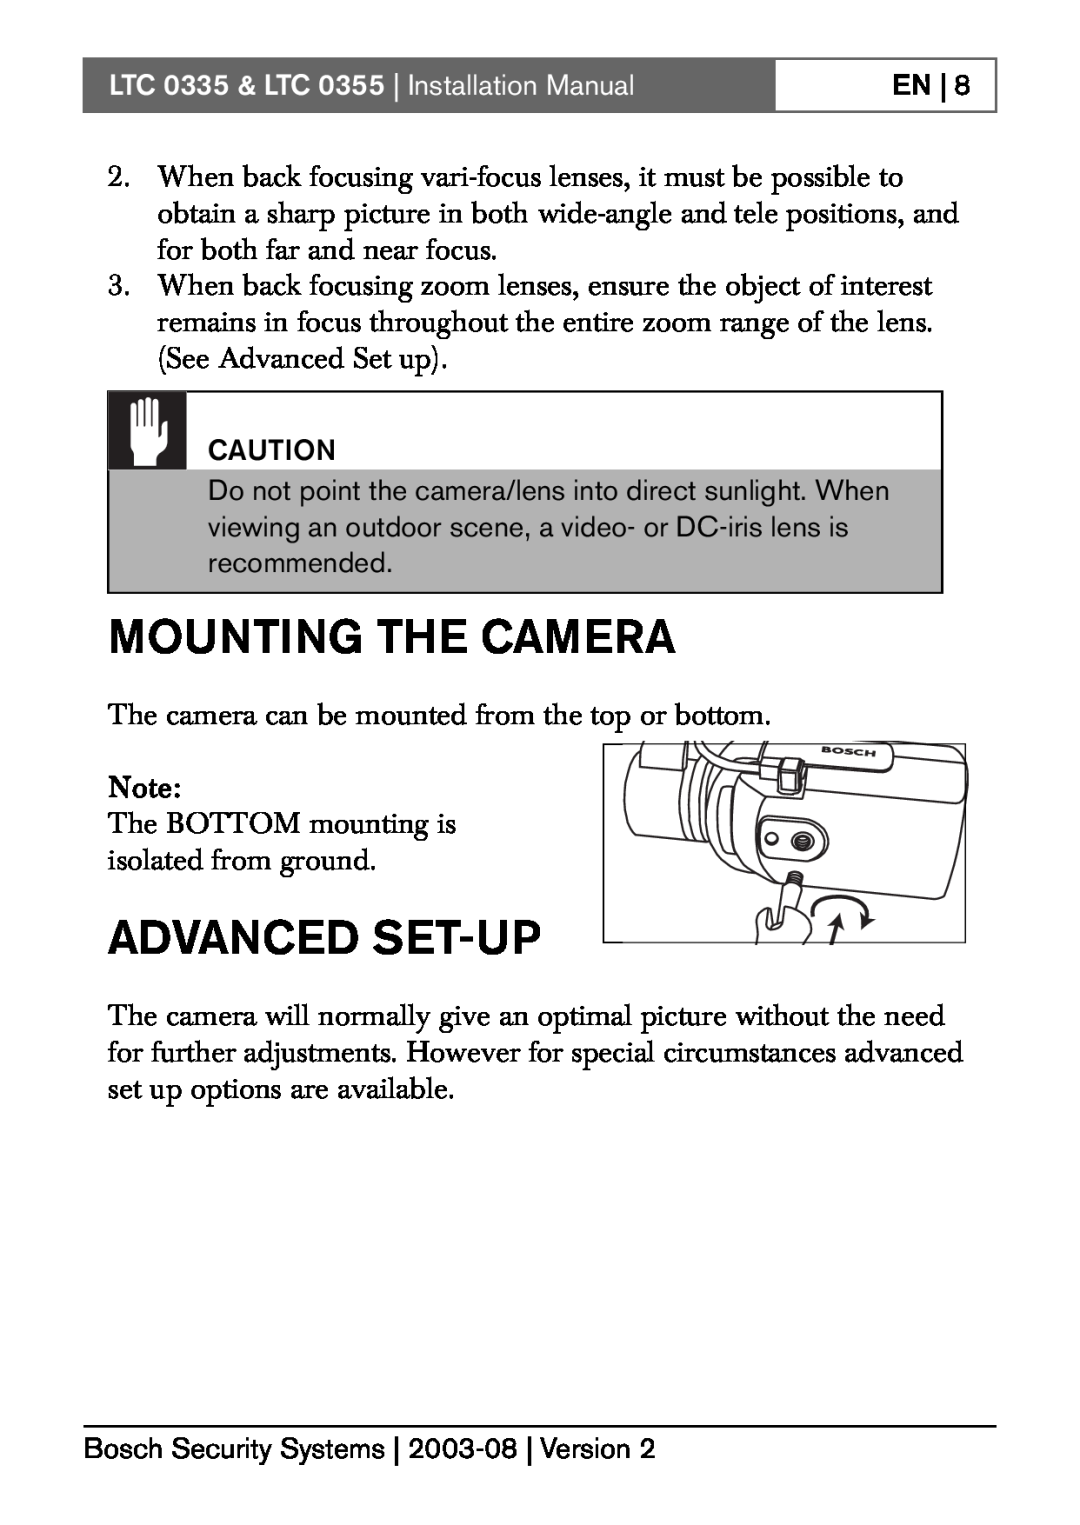 Bosch Appliances installation manual Mounting The Camera, Advanced Set-Up, LTC 0335 & LTC 0355 Installation Manual, En 